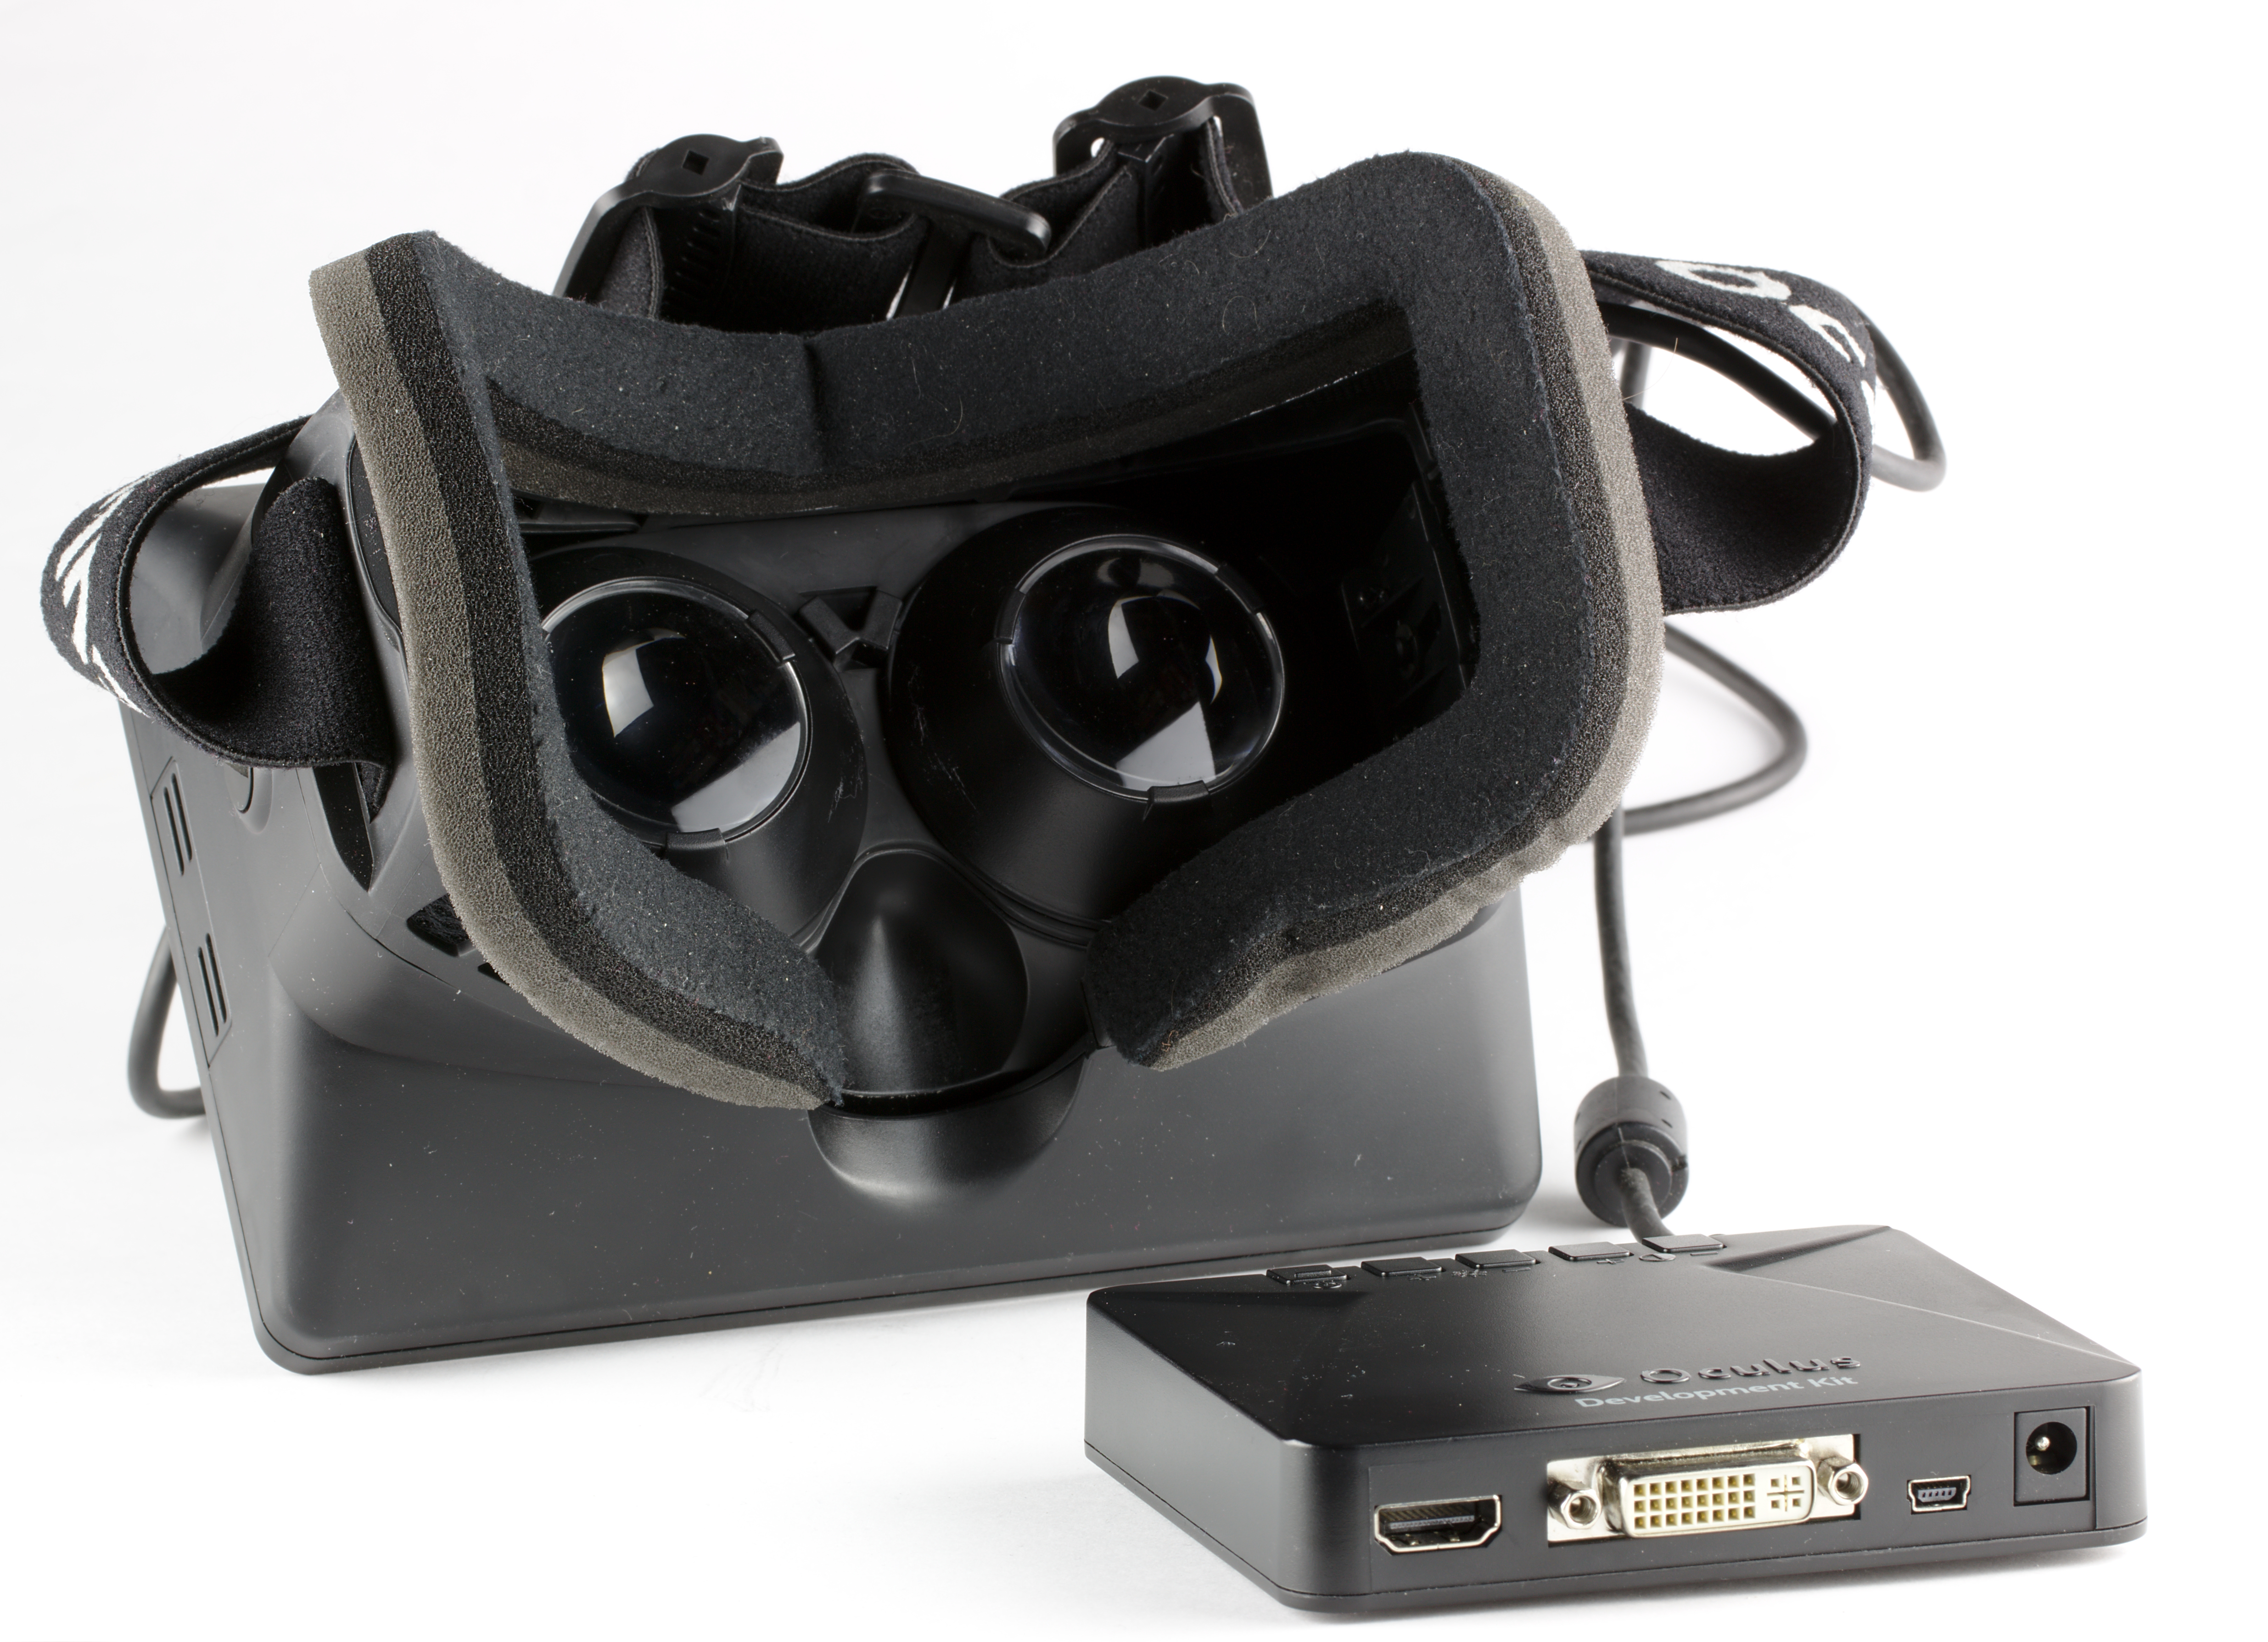 File:Oculus Rift - Developer Version - Back and Control Box.jpg - Wikimedia  Commons